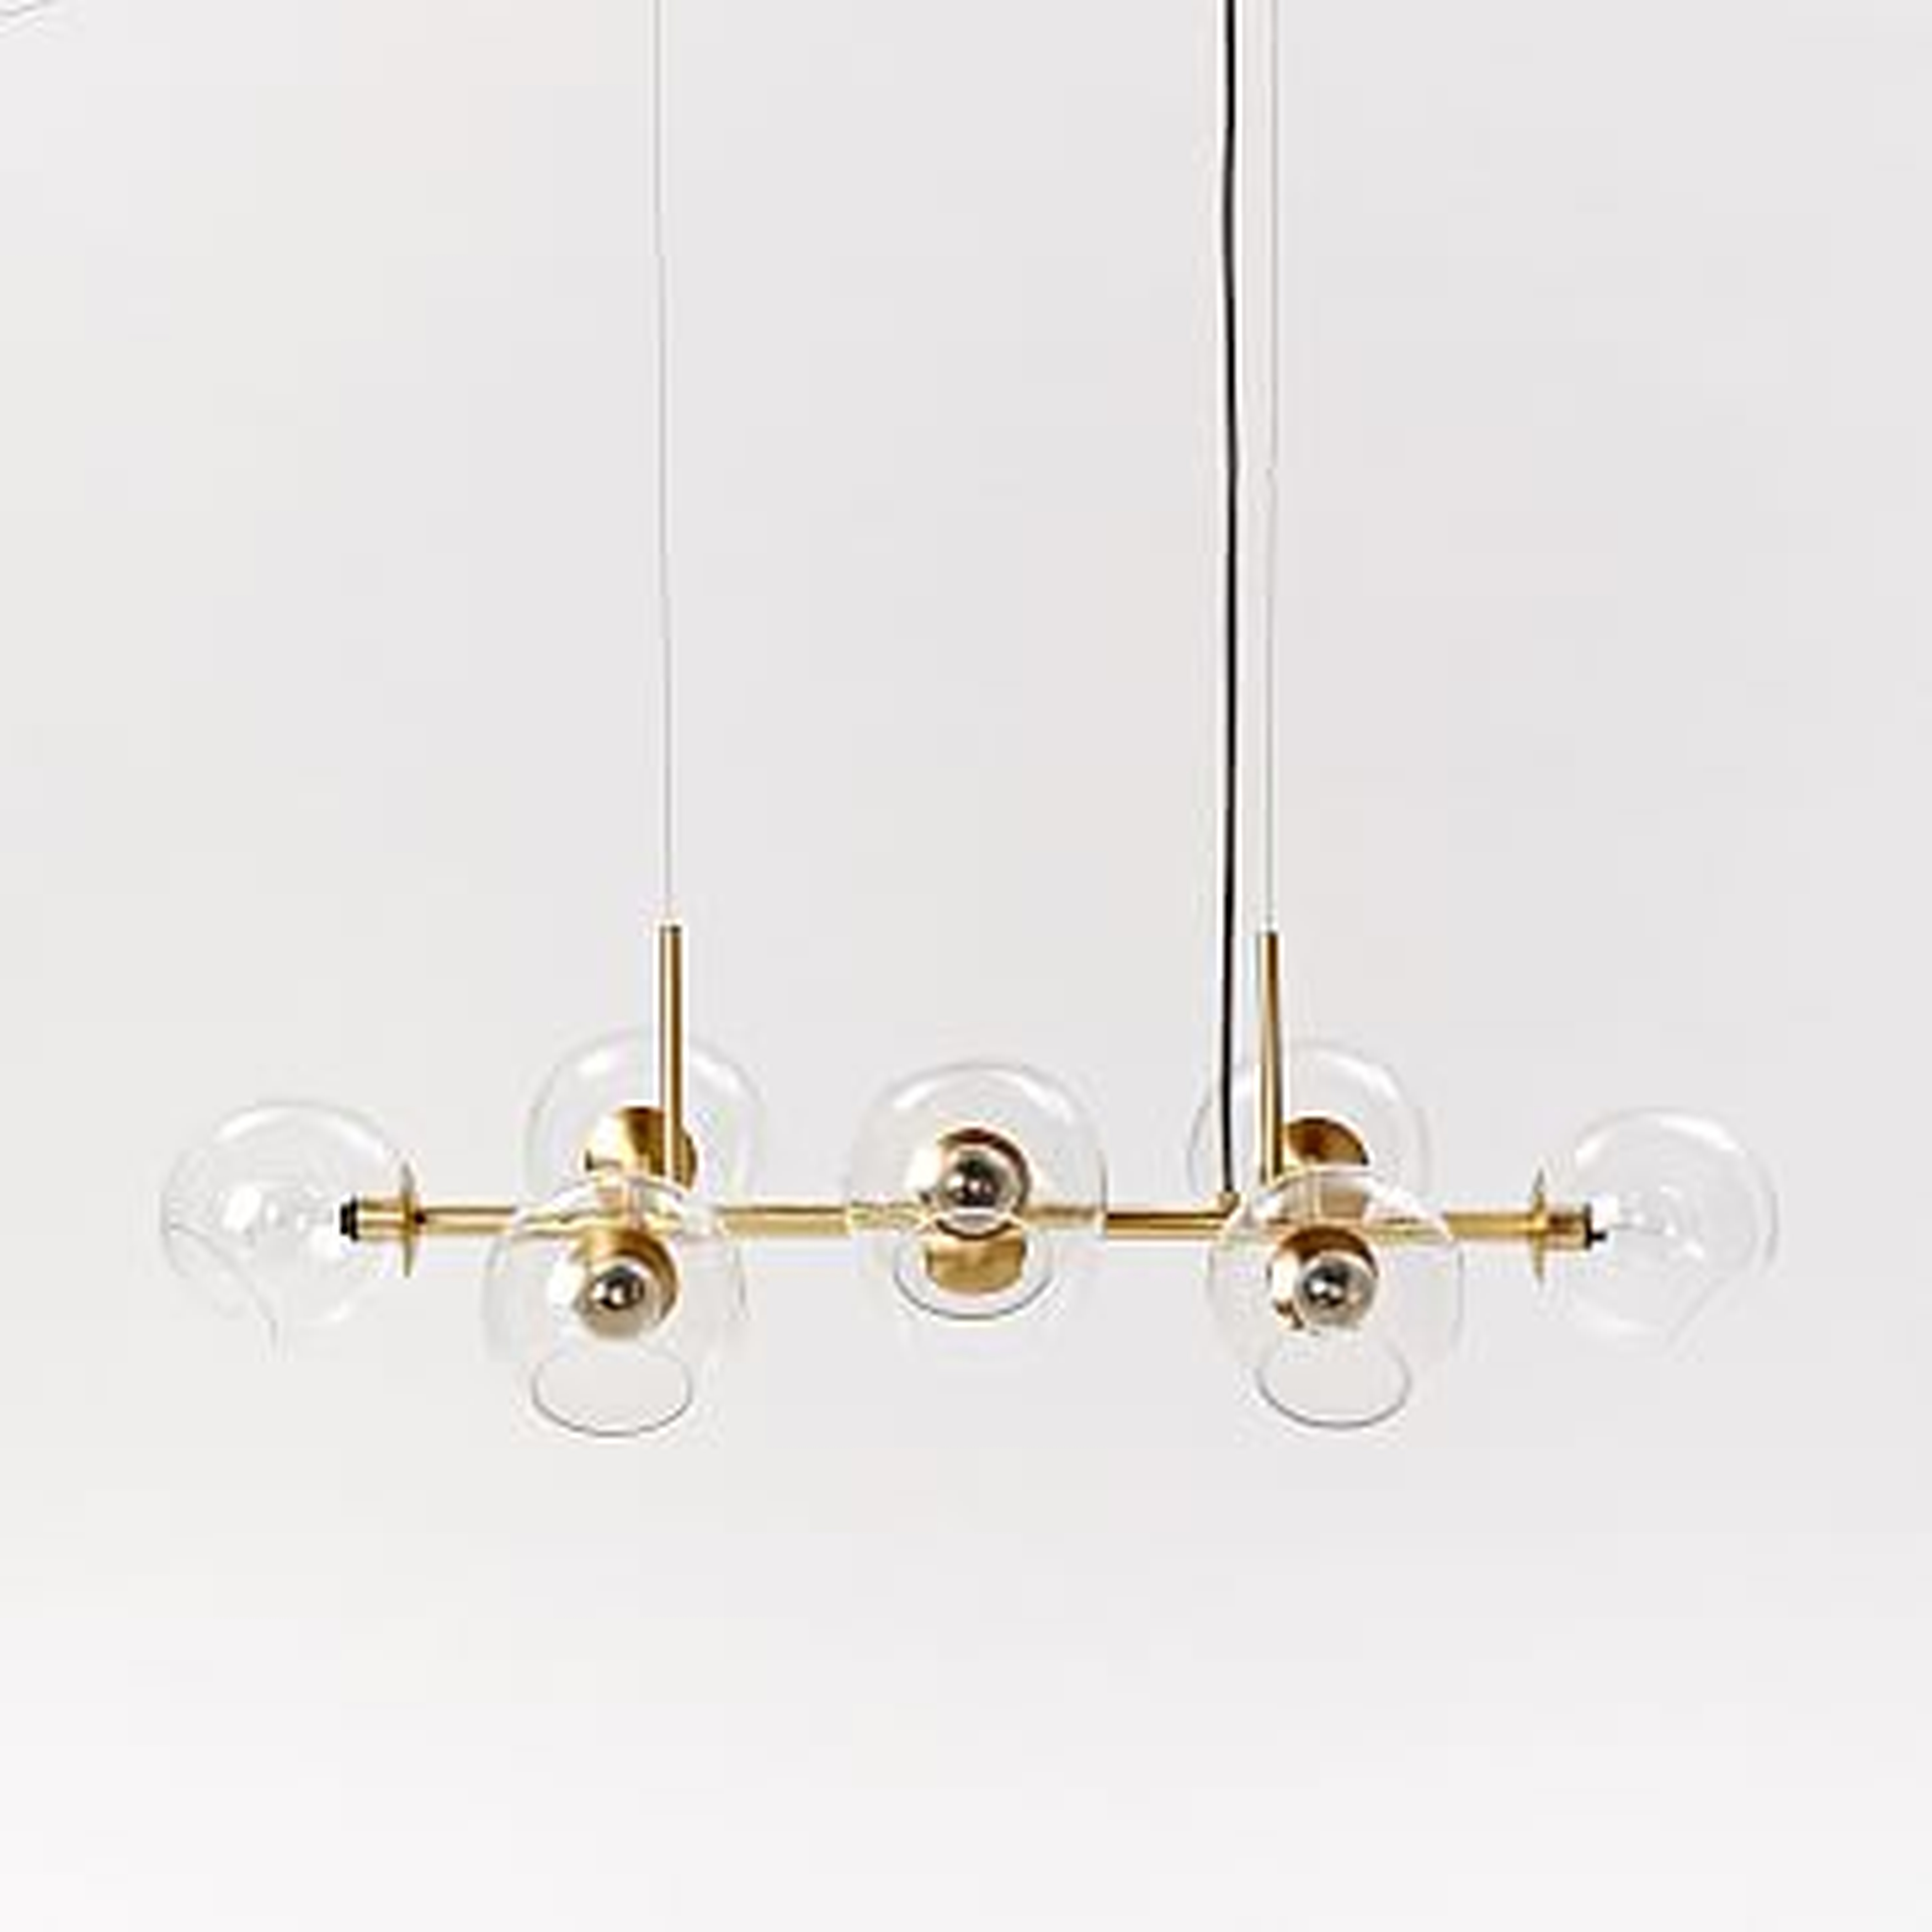 Staggered Glass Chandelier, 8-Light, Antique Brass - West Elm